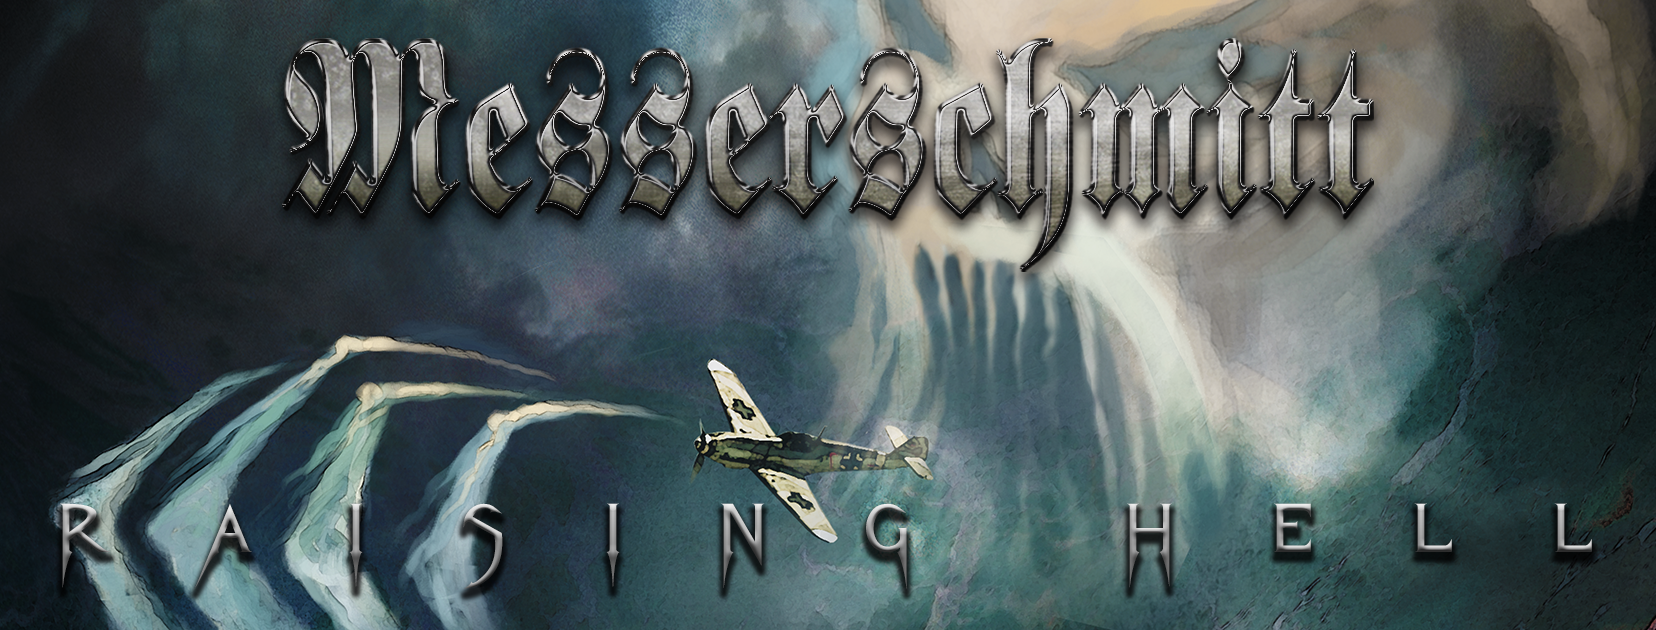 Messerschmitt – Raising Hell: release party fissato per il 29 settembre 2018